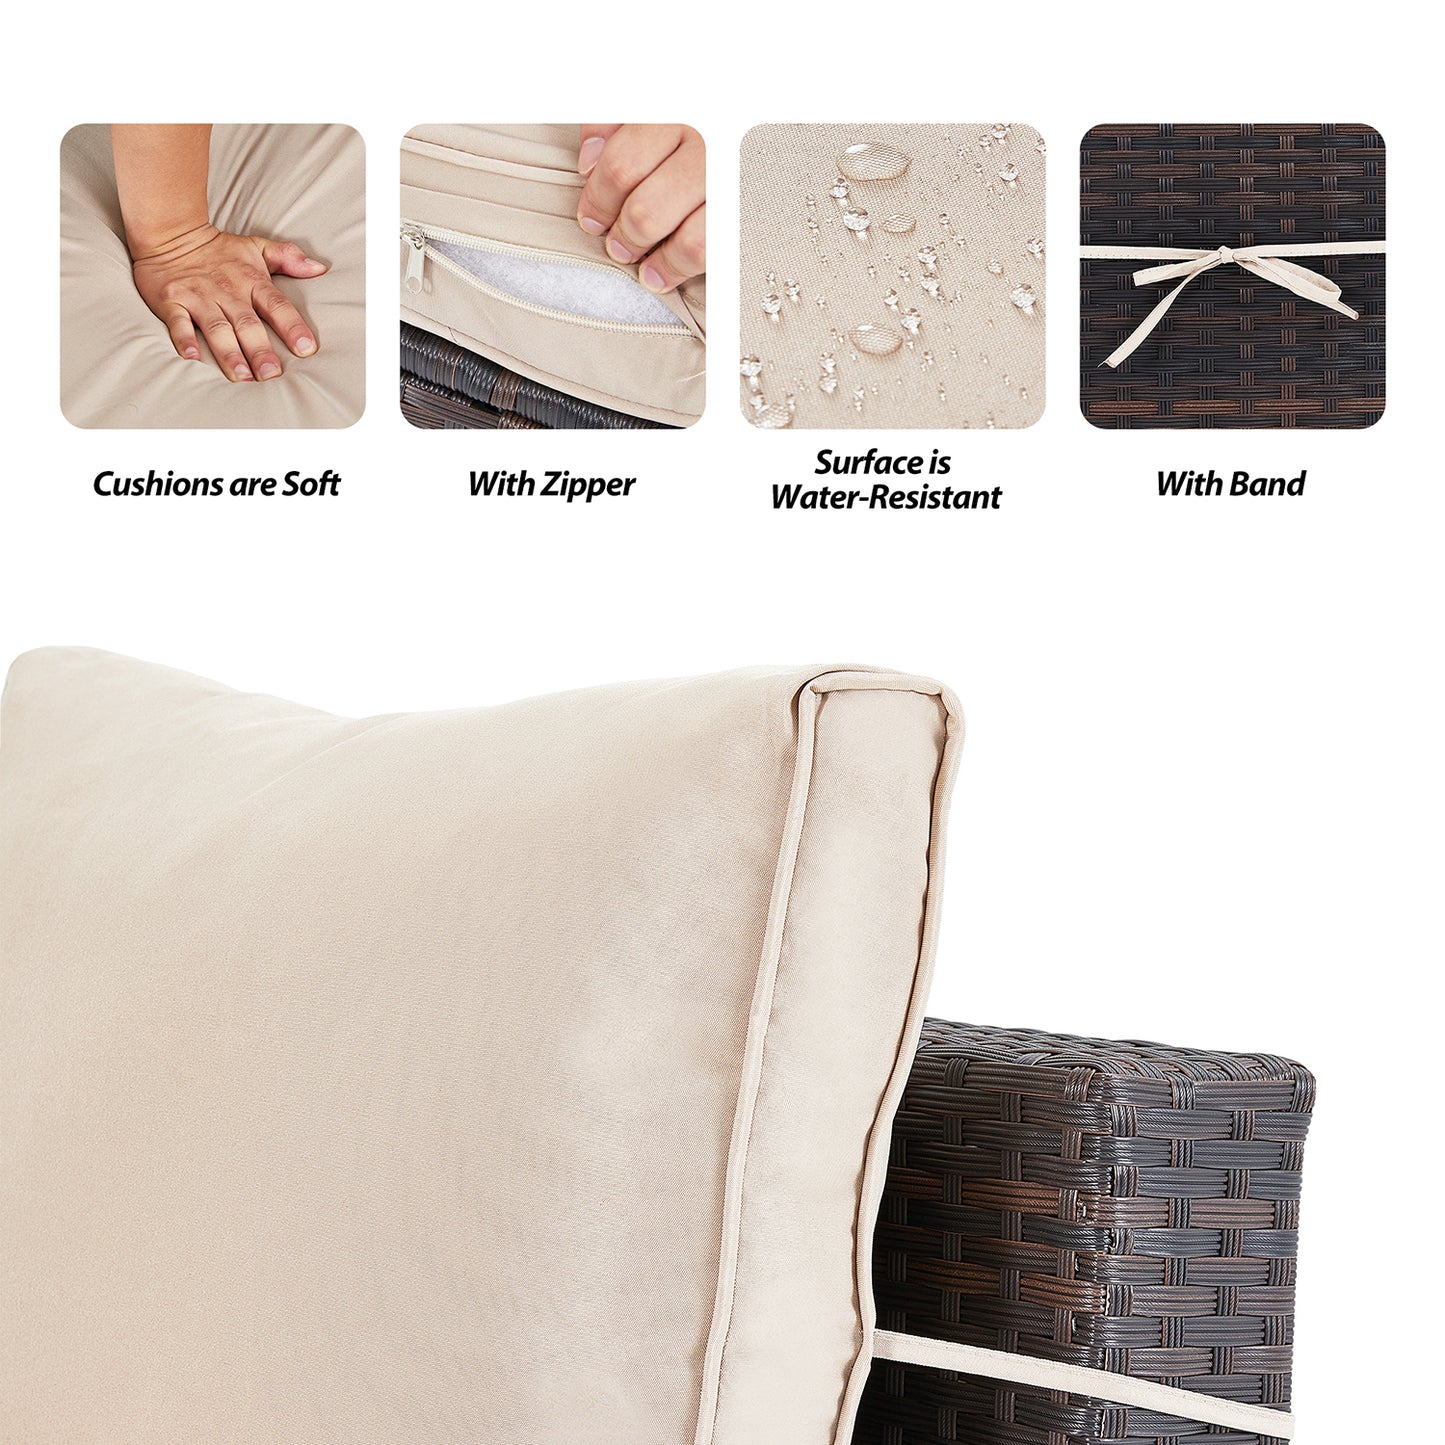 UPHA 7 Pieces Manual Weaving Patio Furniture Set